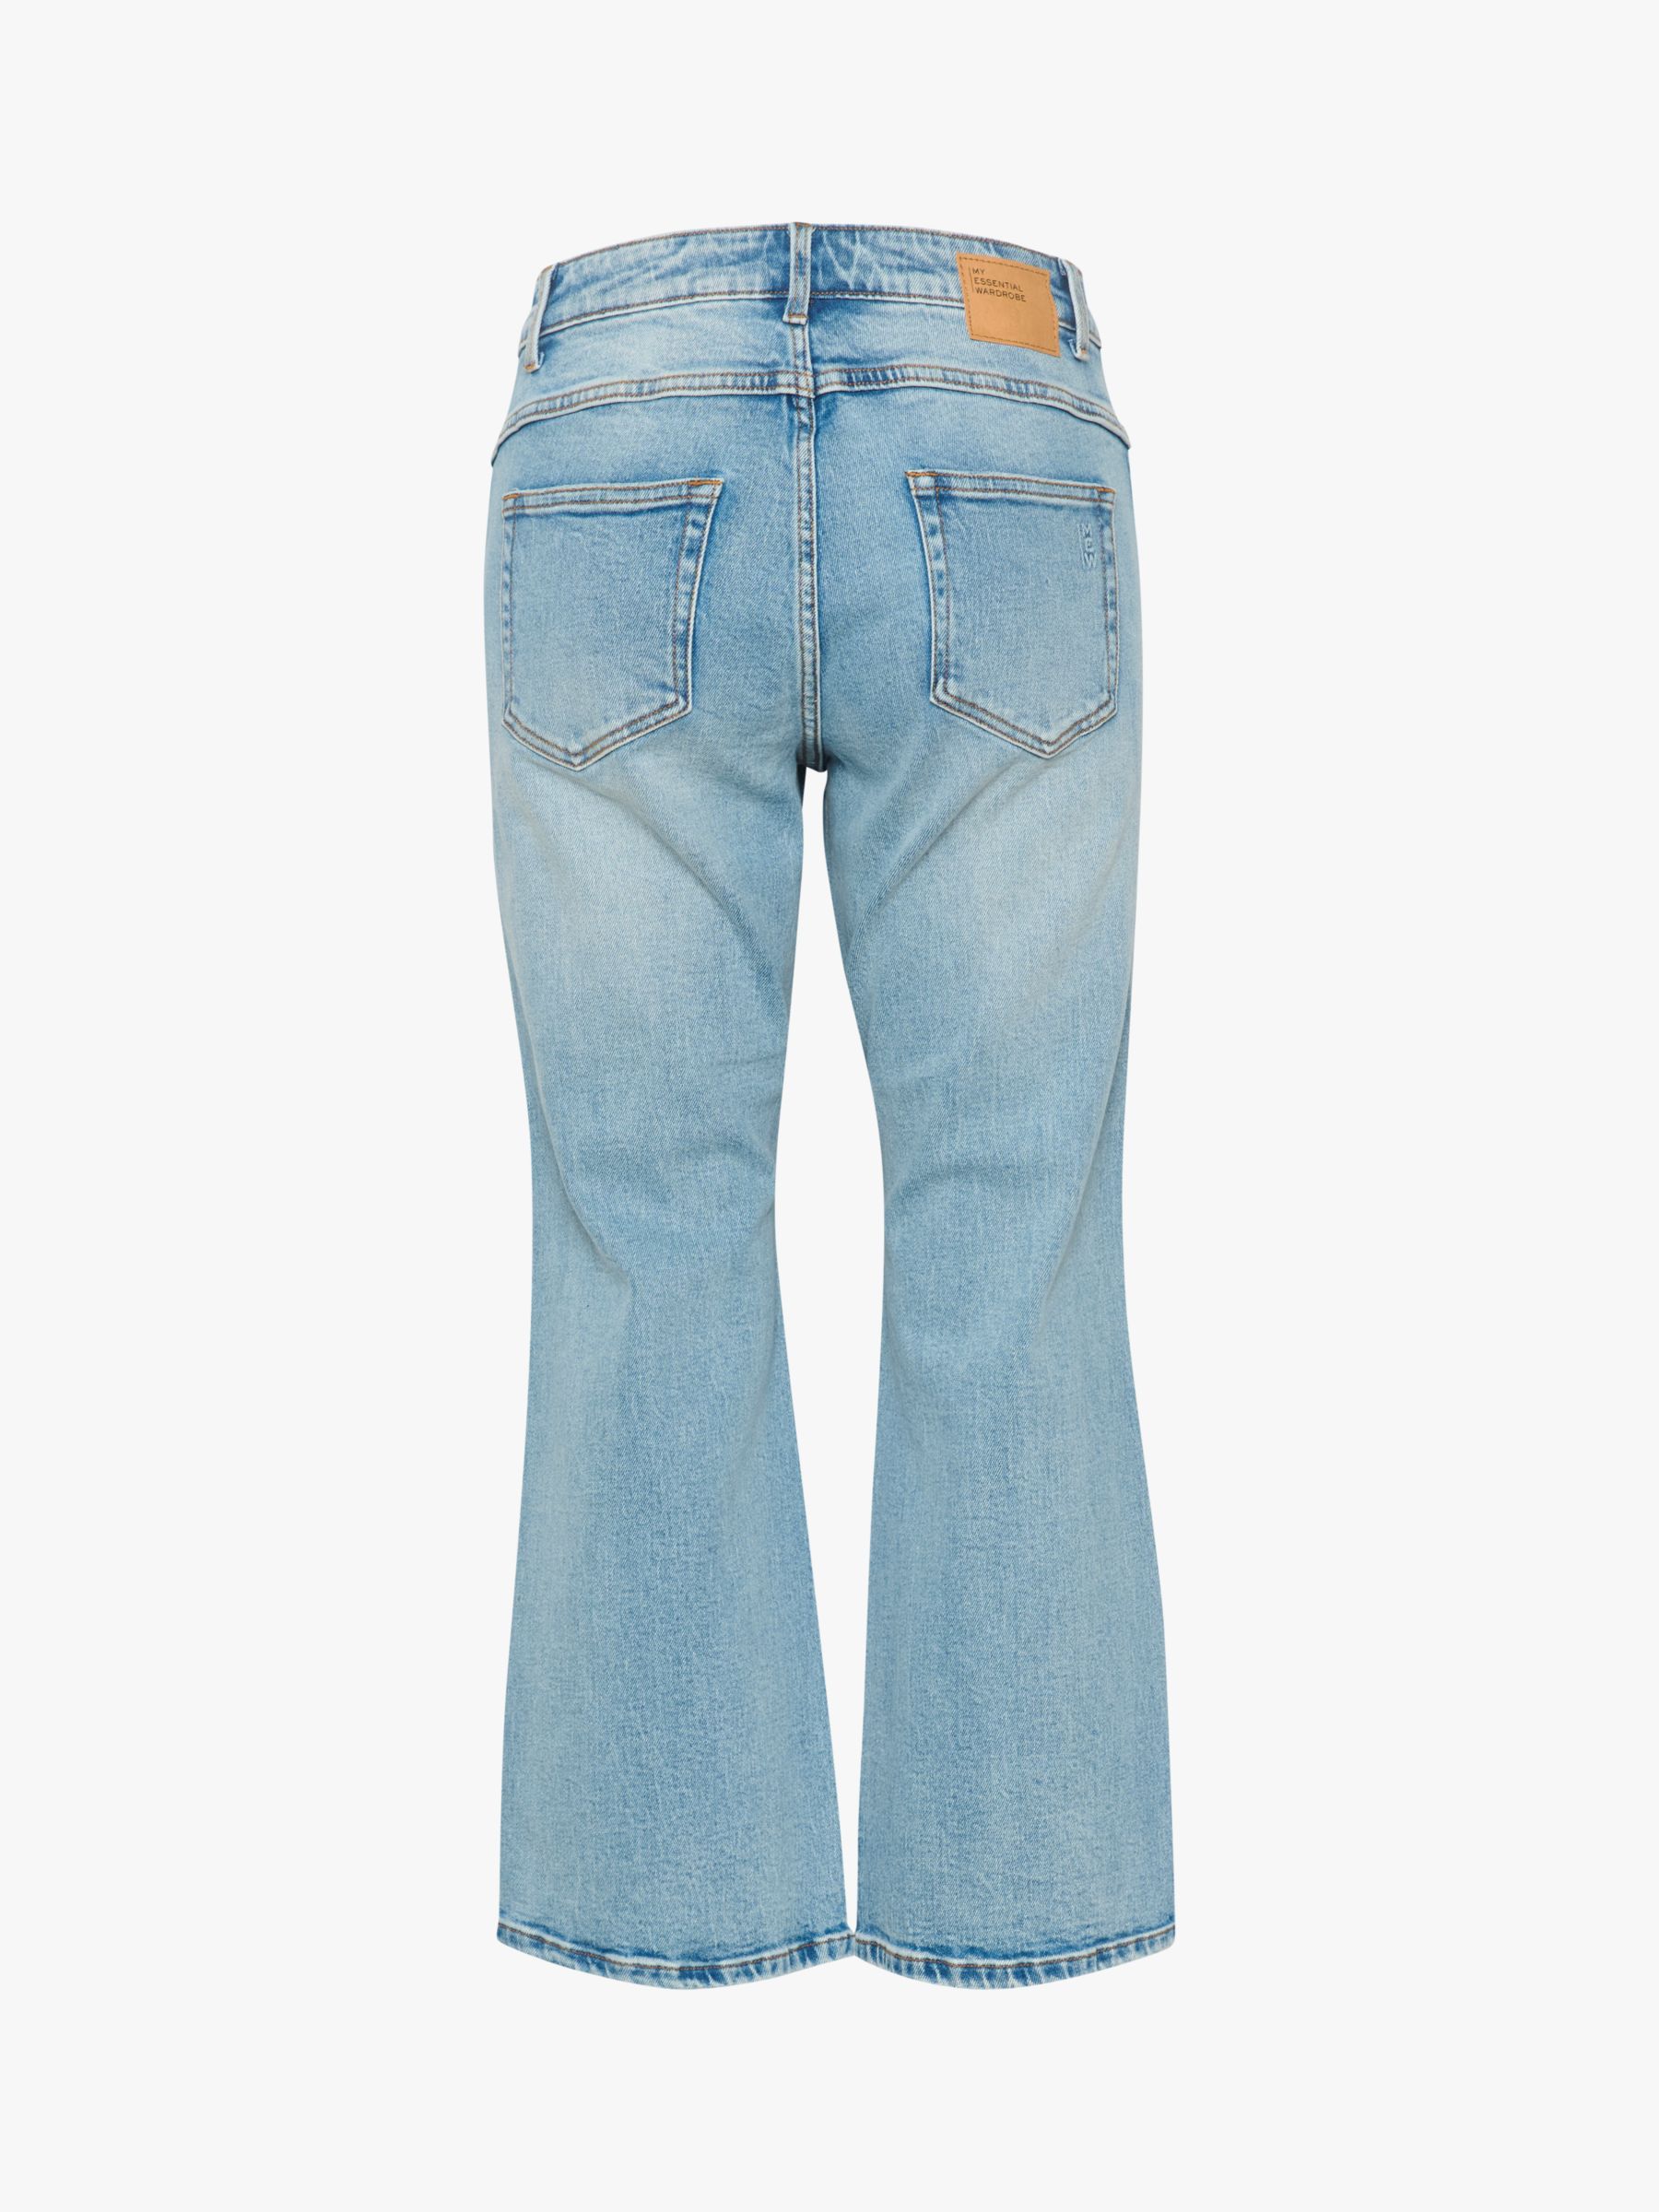 Buy MY ESSENTIAL WARDROBE Dango 114 Flared Leg Cropped Jeans, Medium Blue Wash Online at johnlewis.com